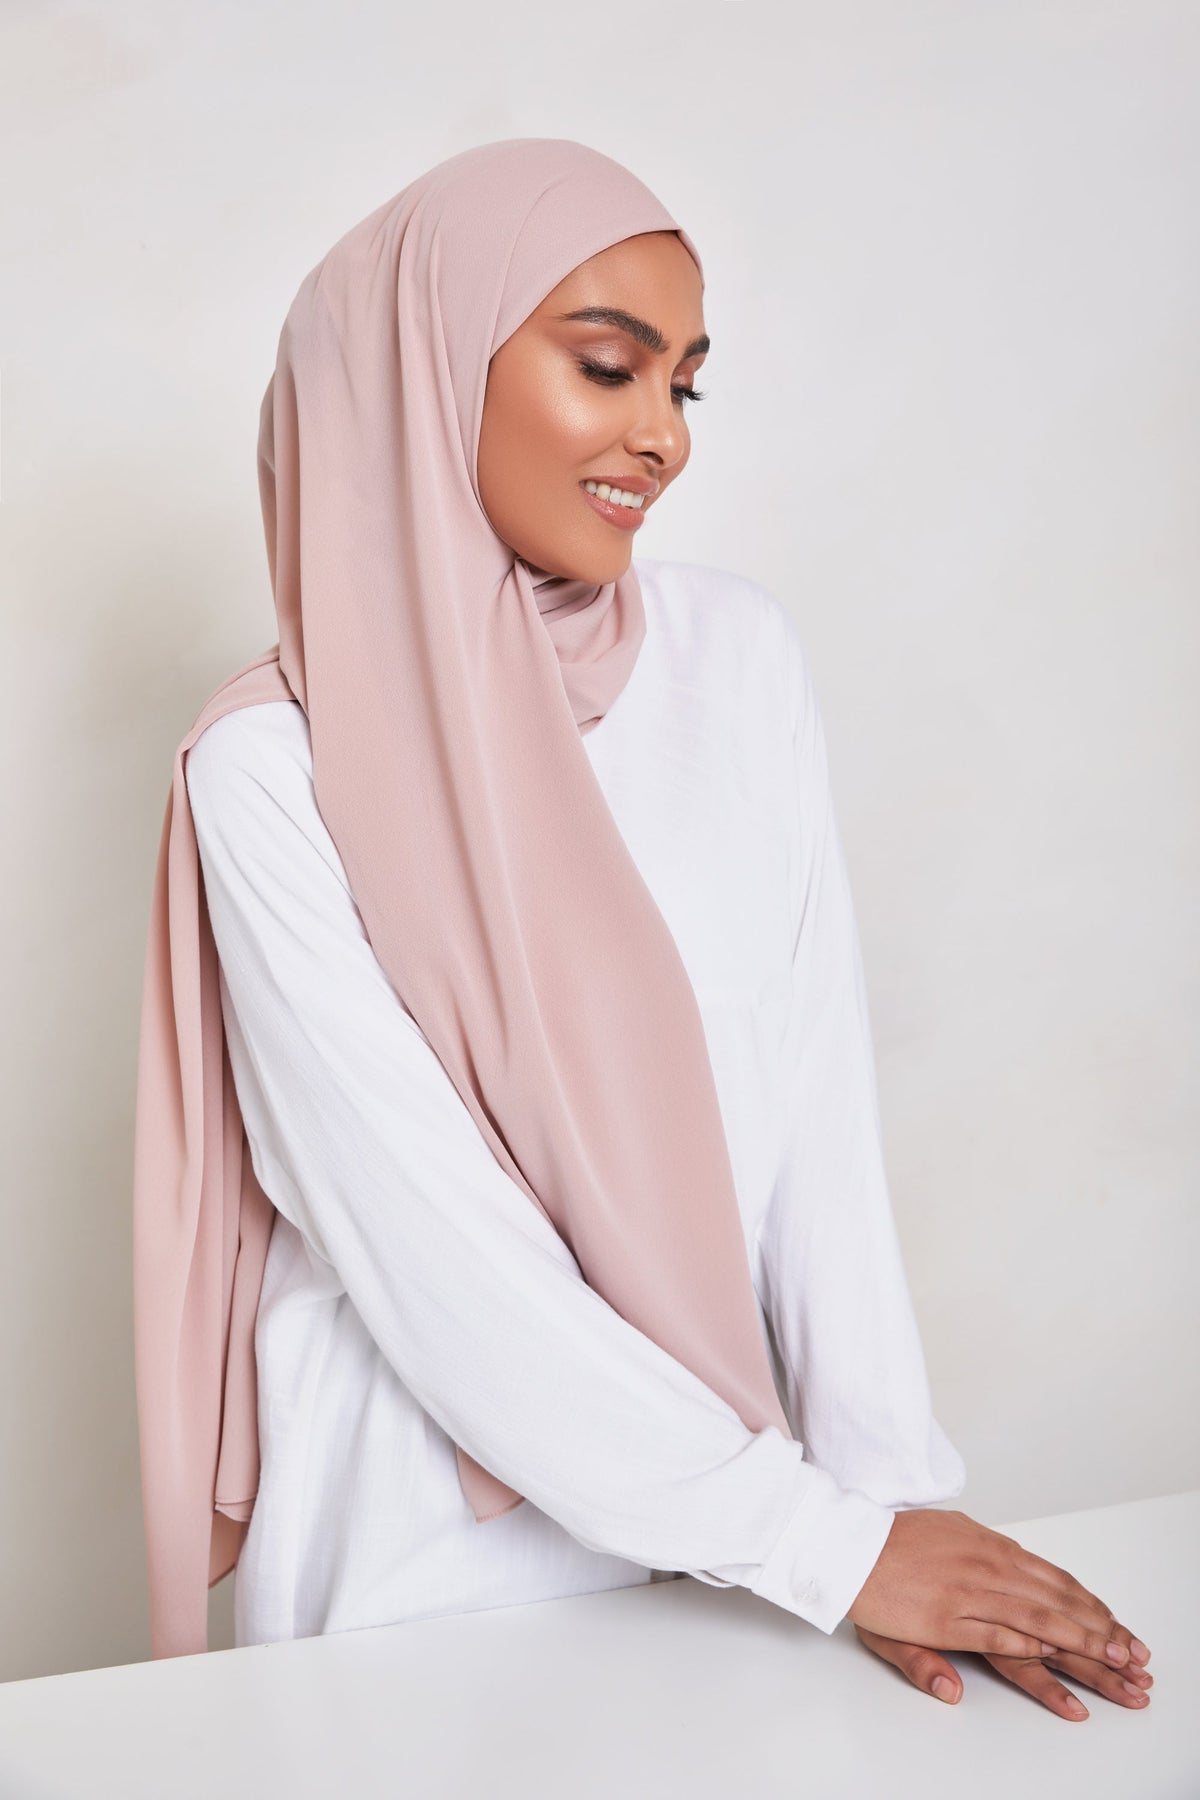 TEXTURE Everyday Chiffon Hijab - Modestly Mink epschoolboard 